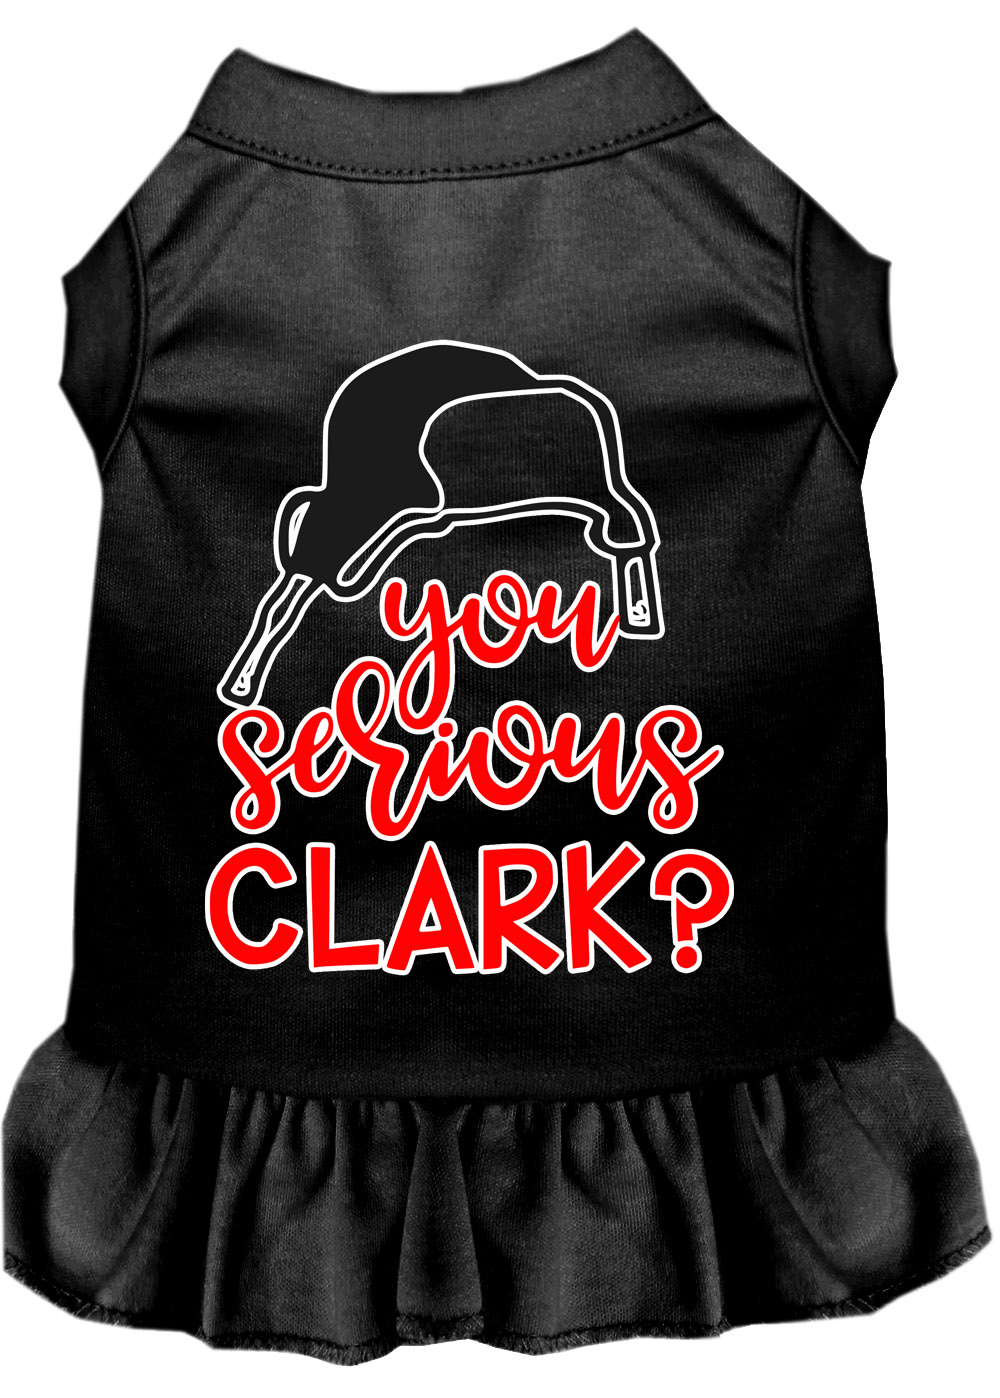 You Serious Clark? Screen Print Dog Dress Black Sm